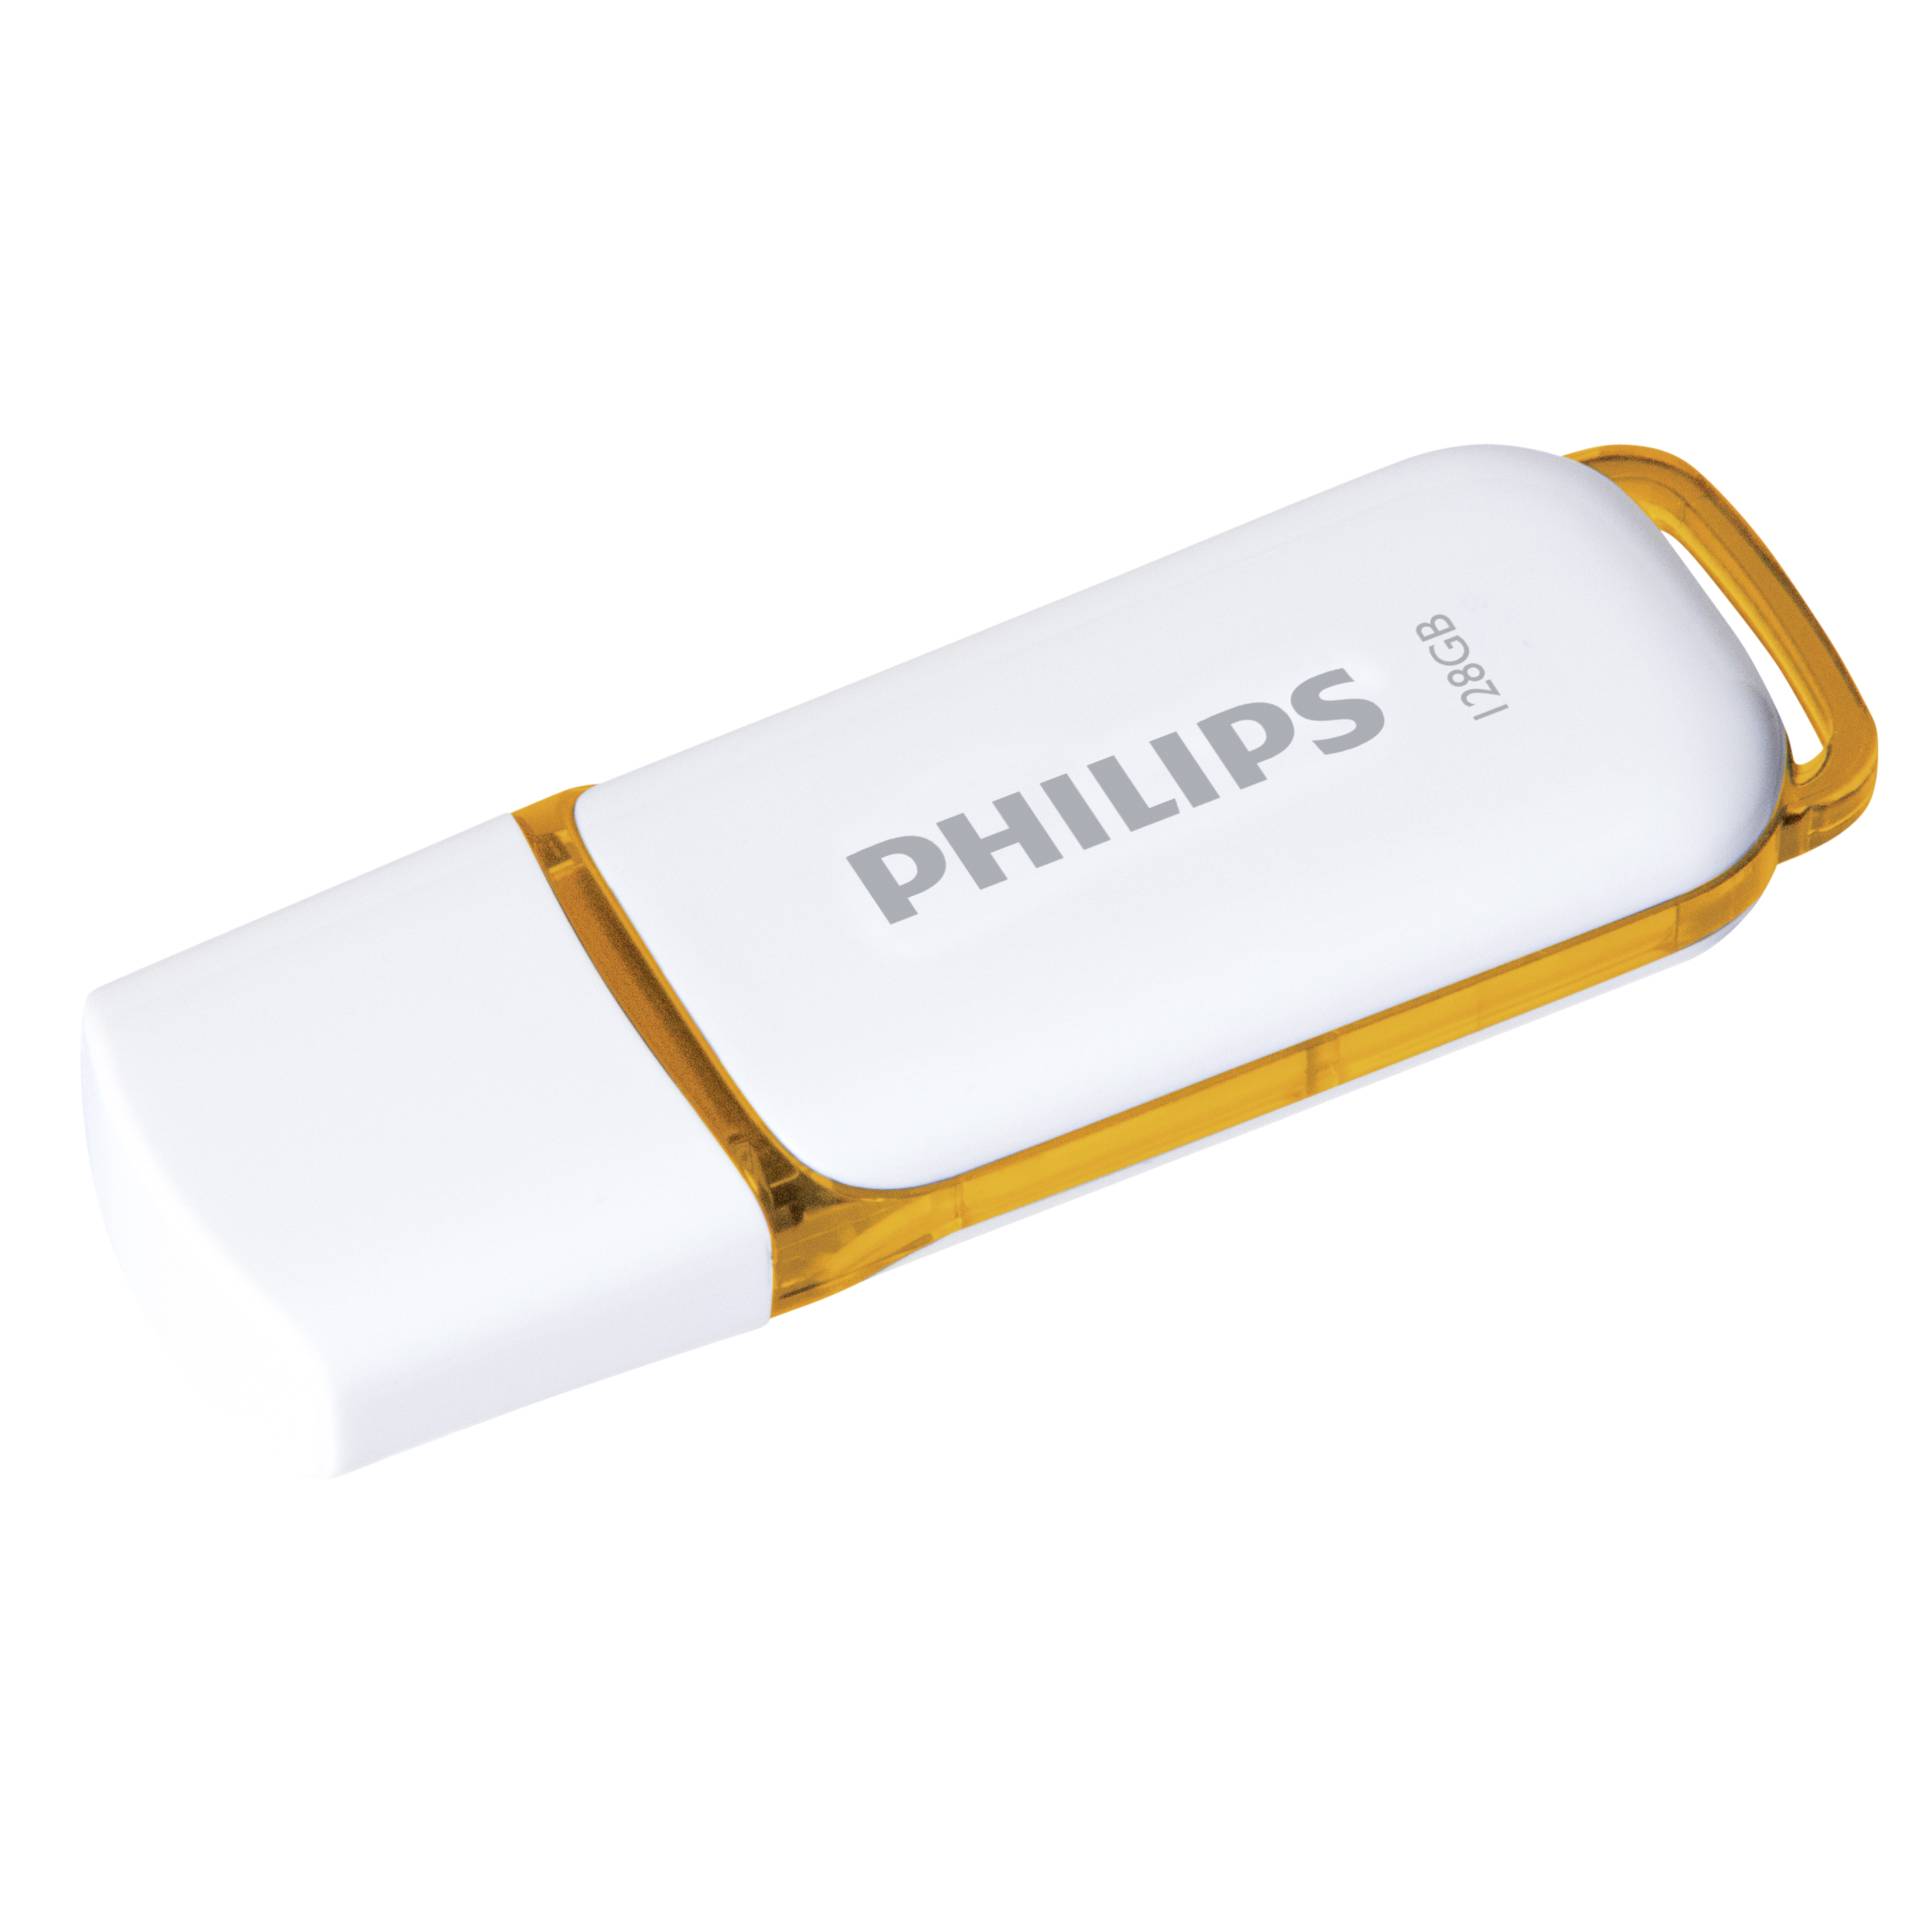 Philips USB 2.0            128GB Snow Edition arancio